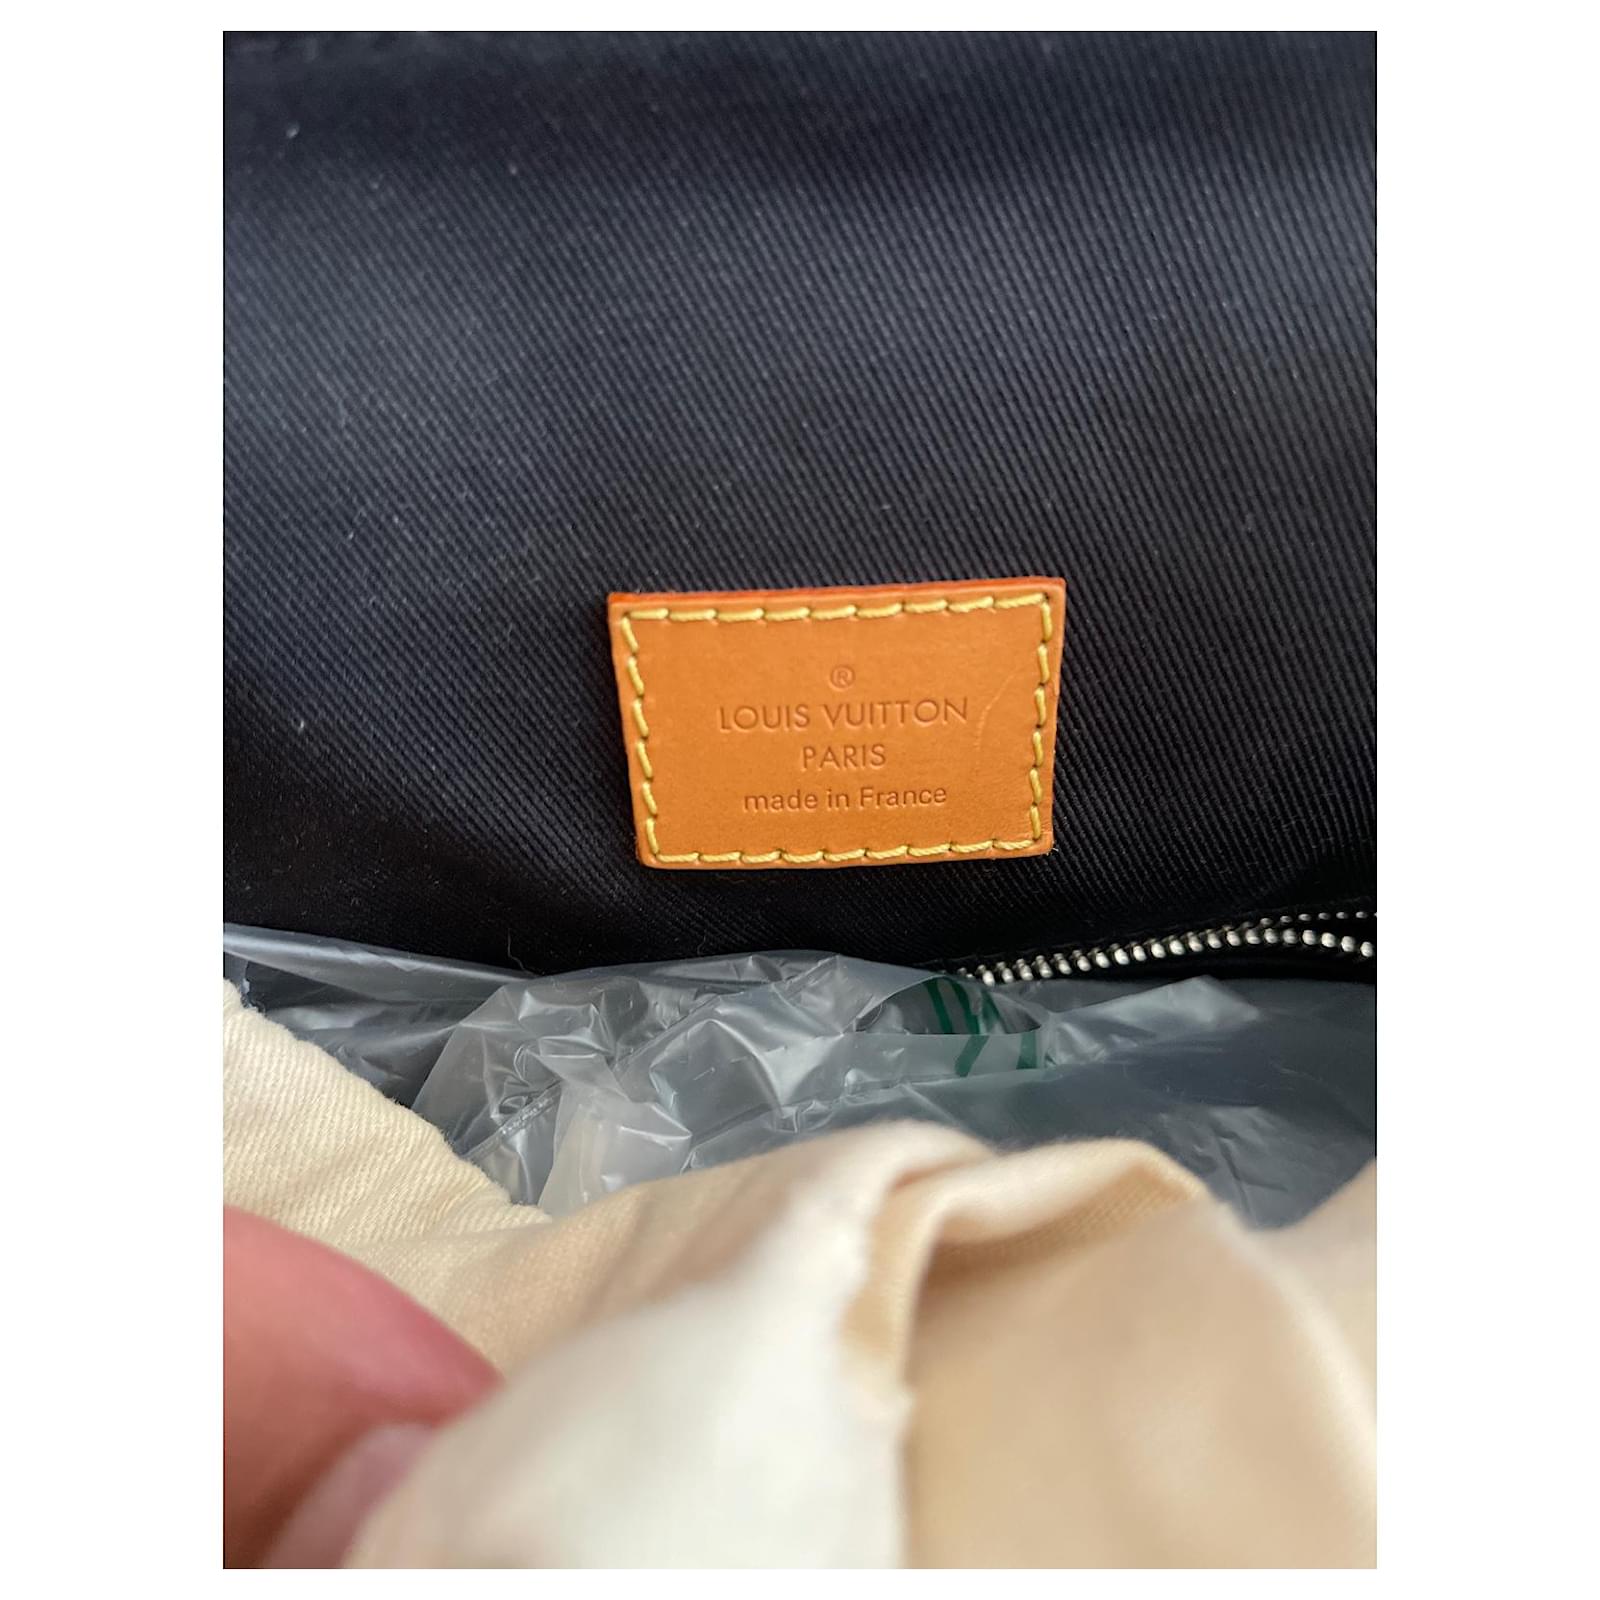 Louis Vuitton Christopher PM Brown Damier Monogram Backpack Nigo x